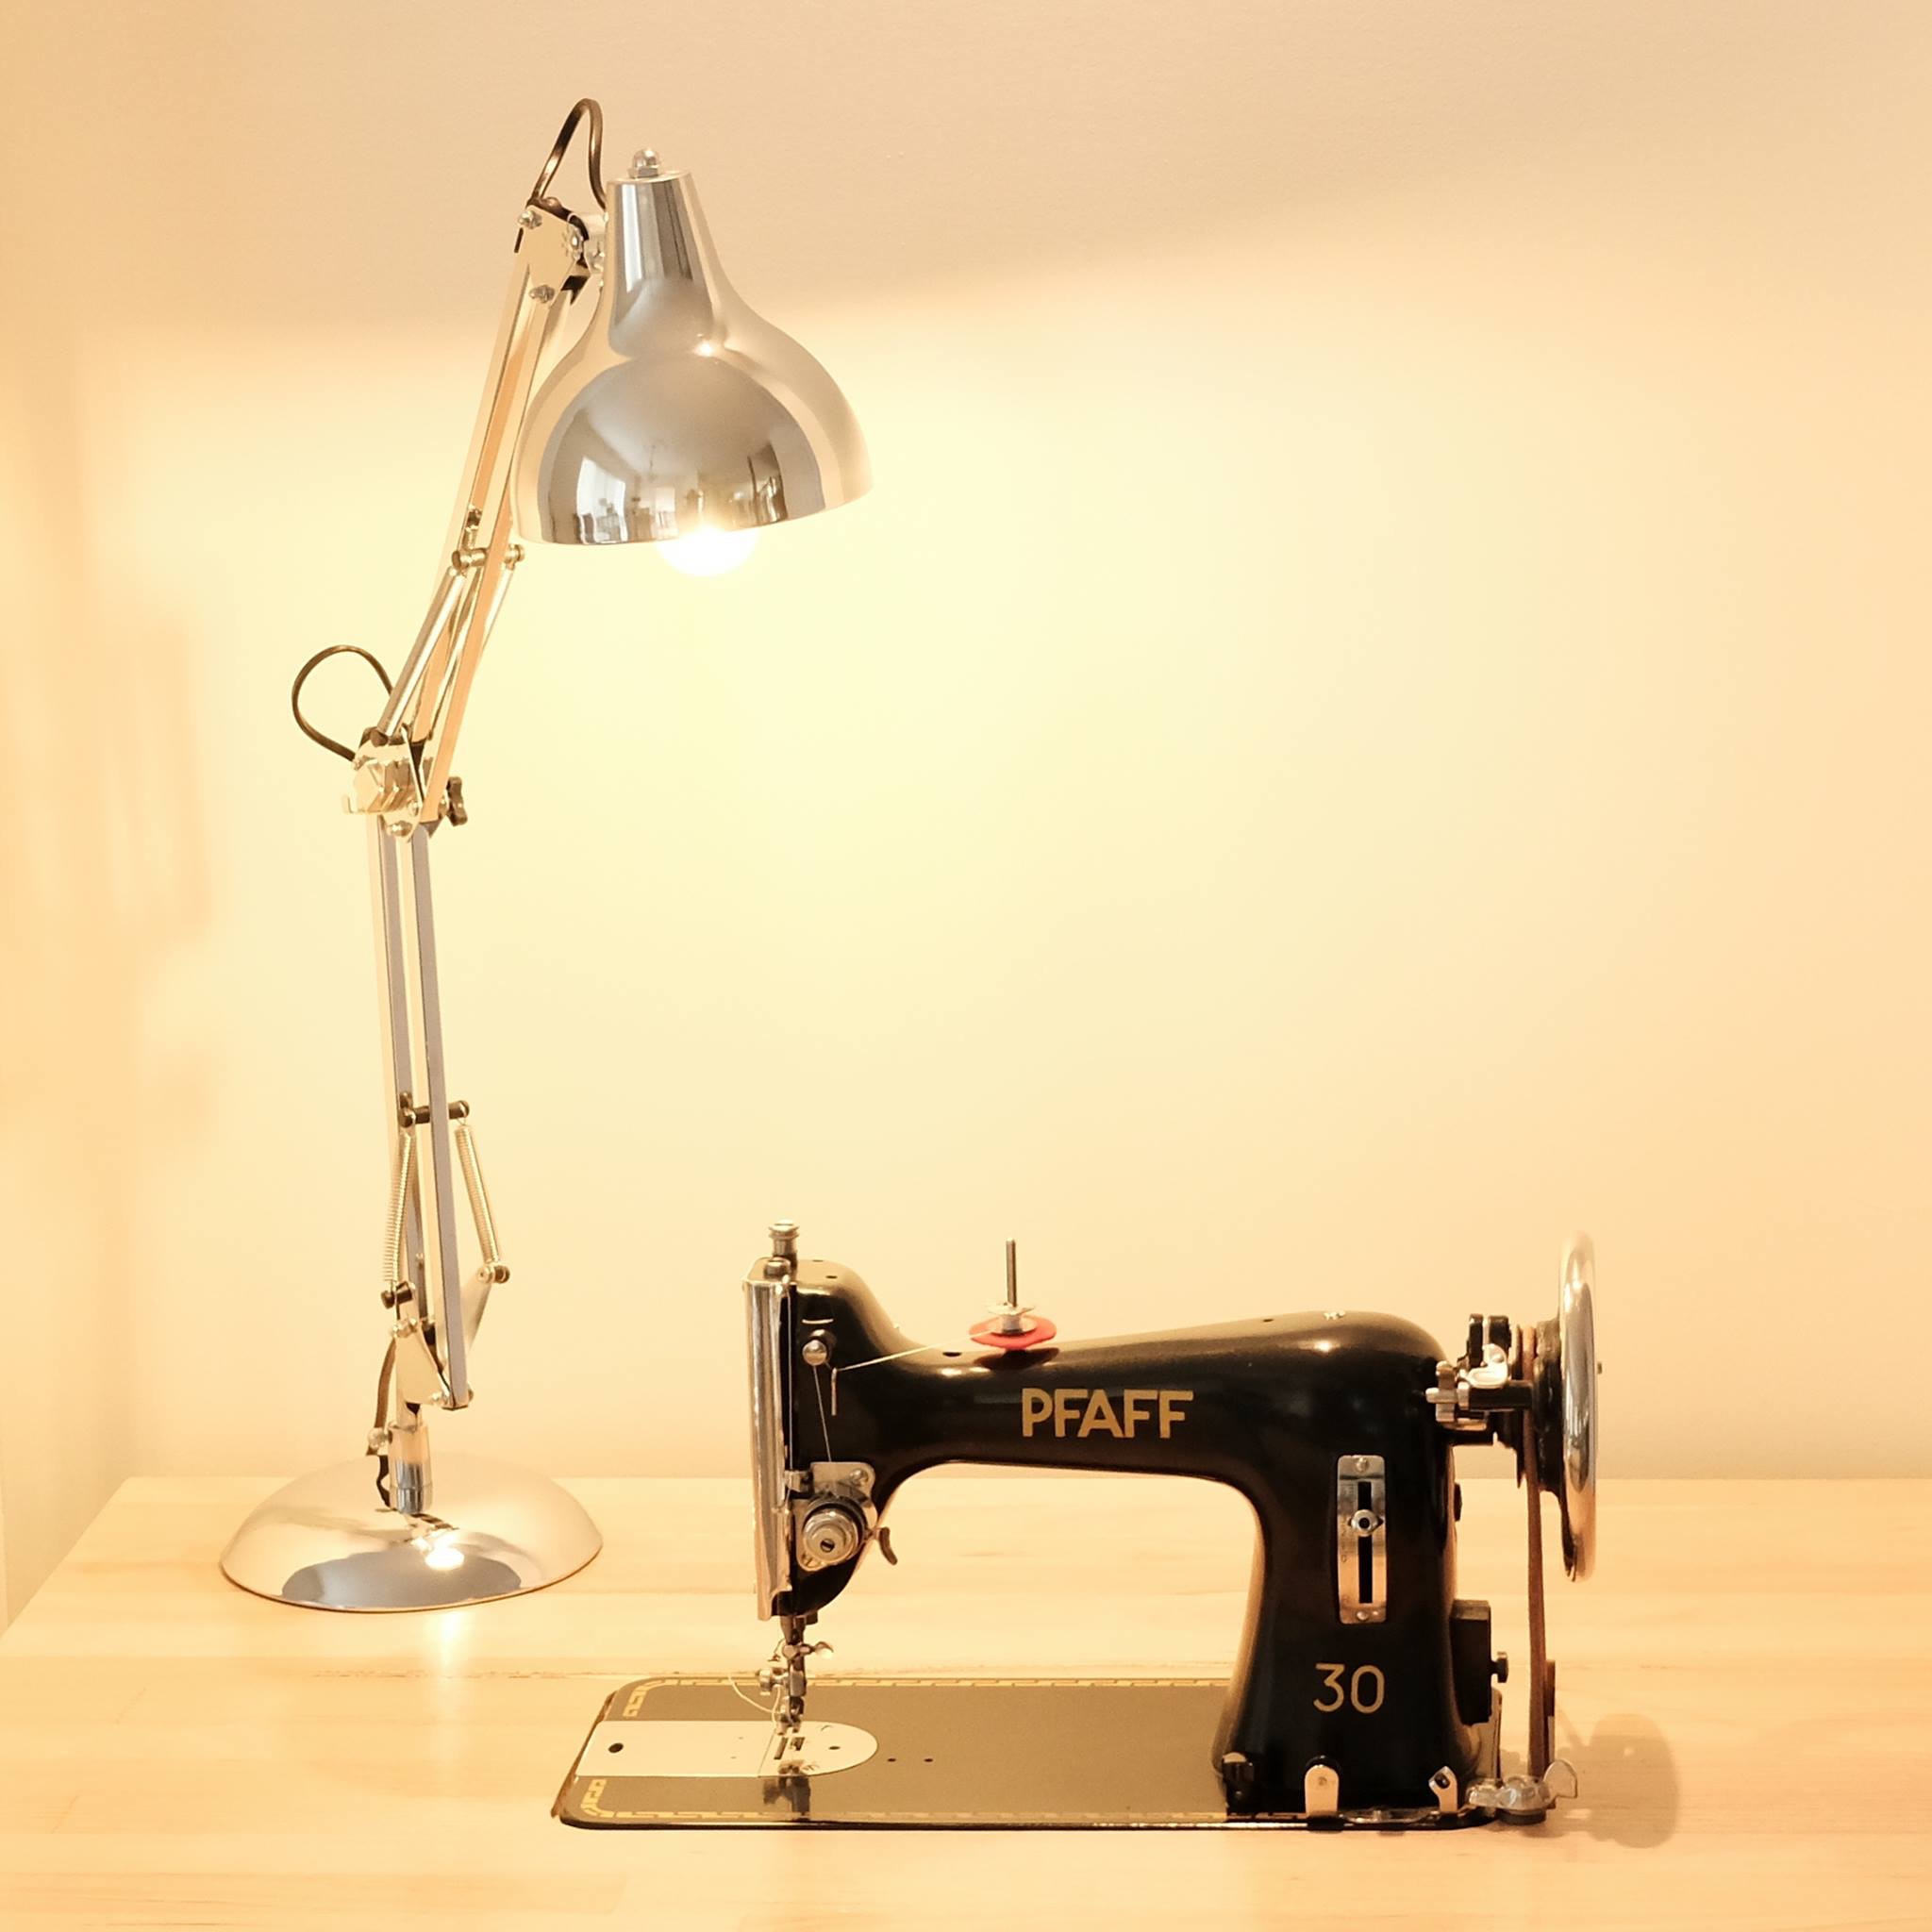 Pfaff 30 Sewing Machine Demonstration 